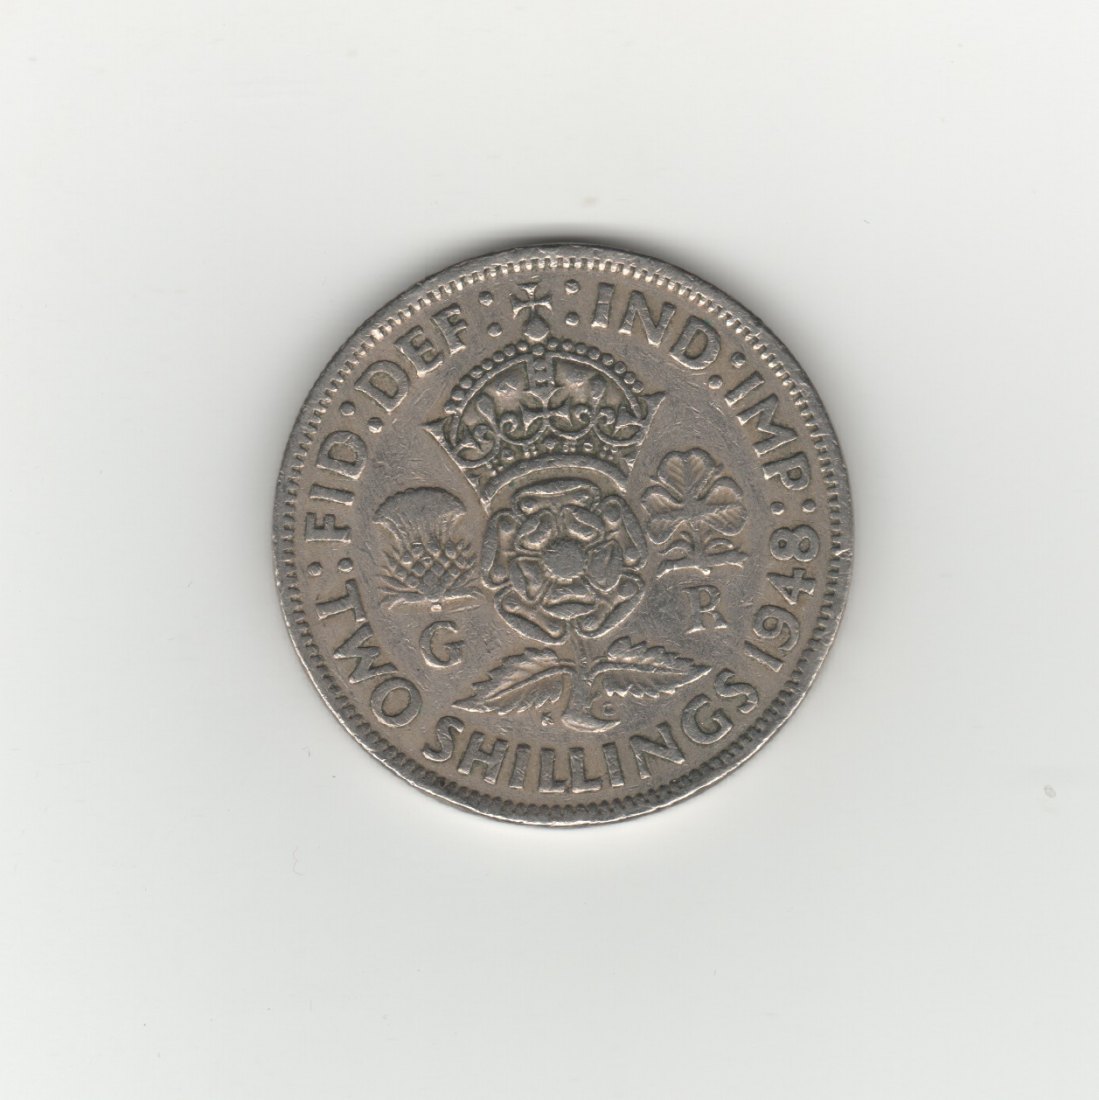  Großbritannien 2 Shillings 1948   